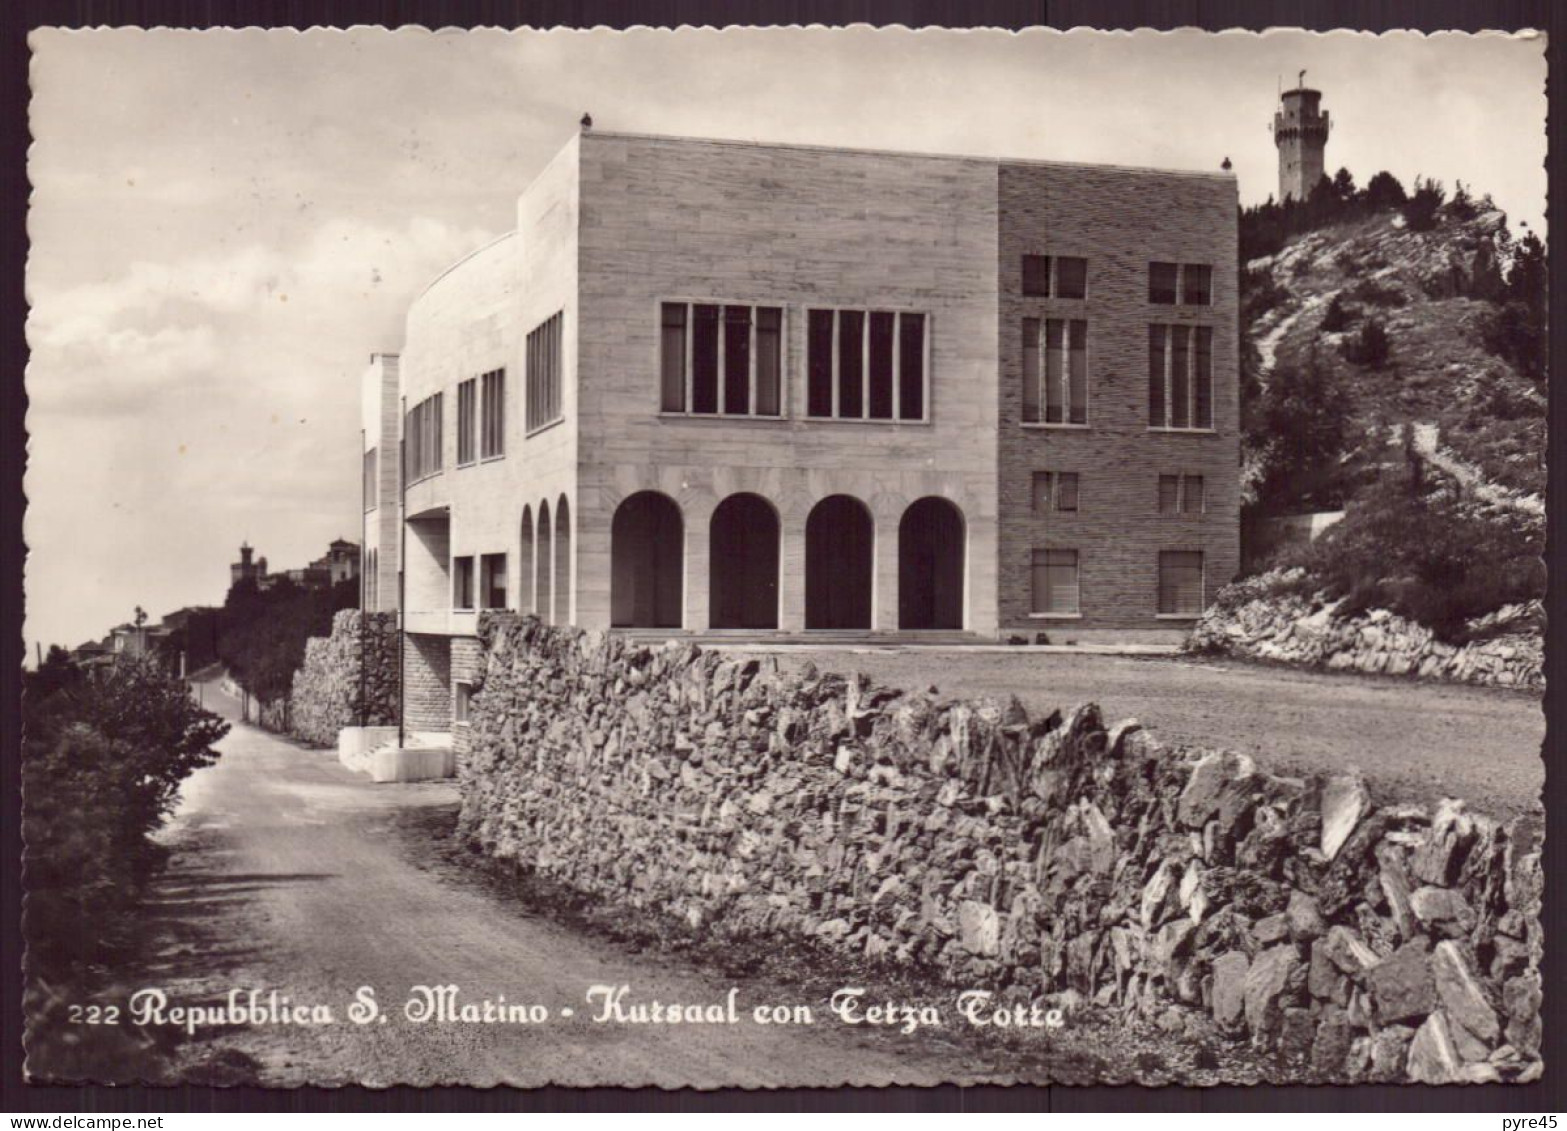 SAINT MARIN REPUBBLICA S. MARINO KURSAAL CON TETZA TORRE - San Marino